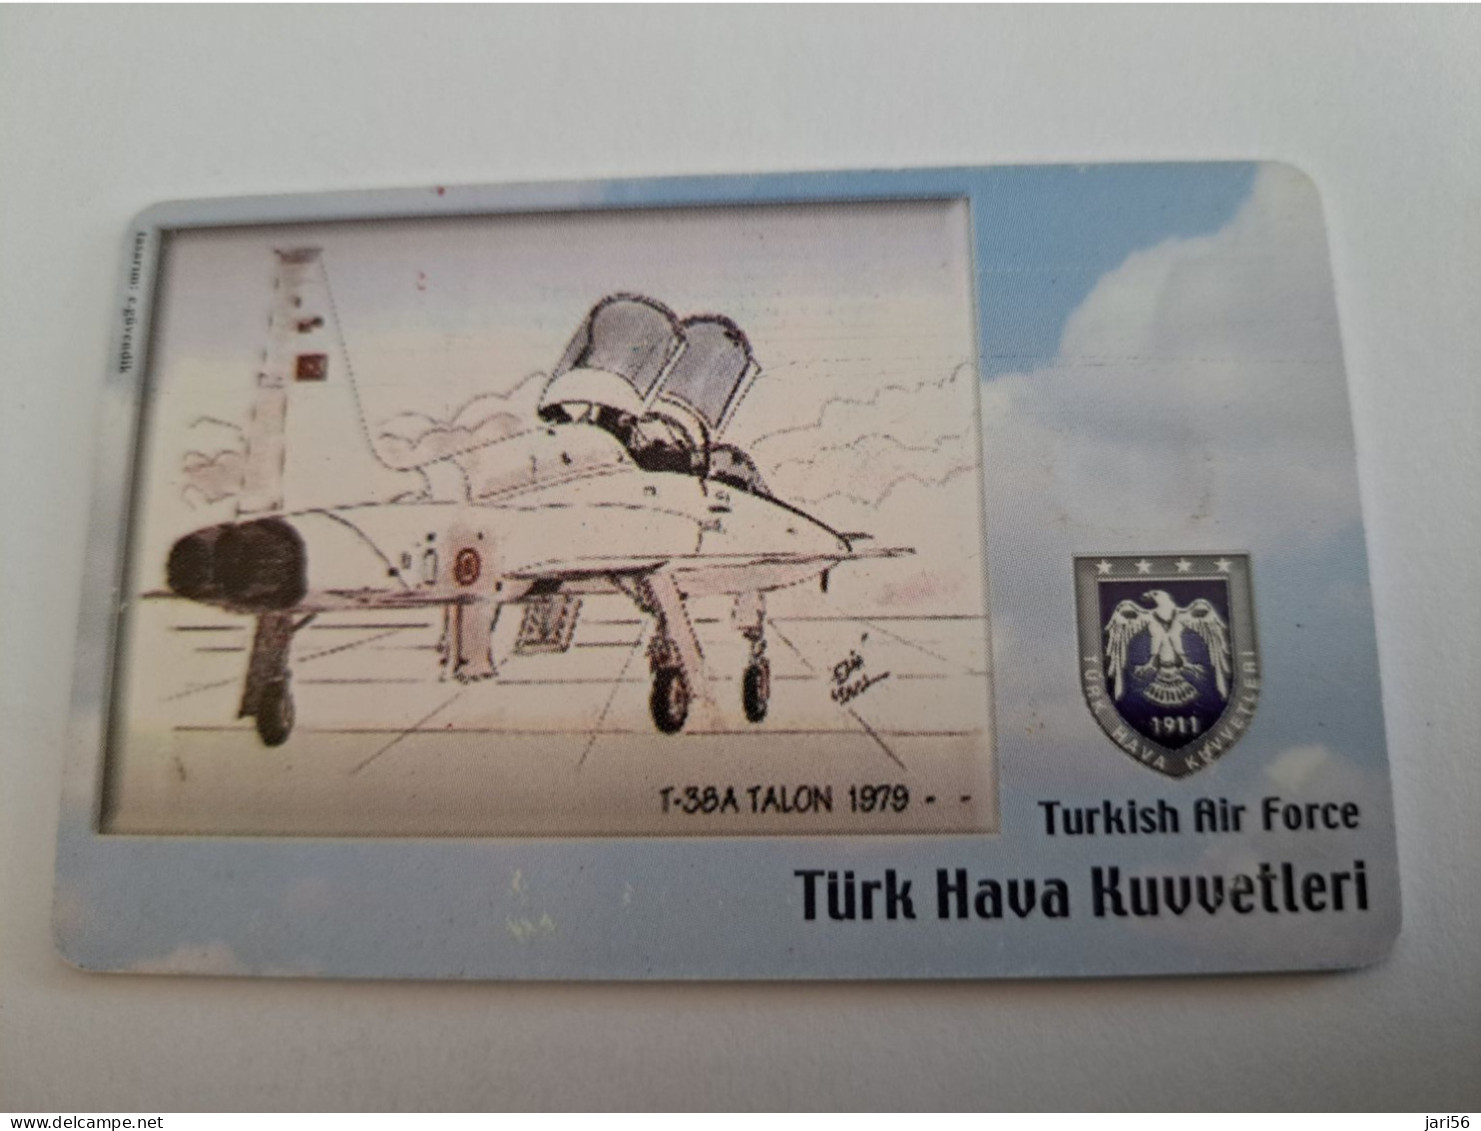 TURKIJE / 50 UNITS/ CHIPCARD/ TURKISH AIR FORCE  / DIFFERENT PLANES /        Fine Used Card  **15444** - Turkey